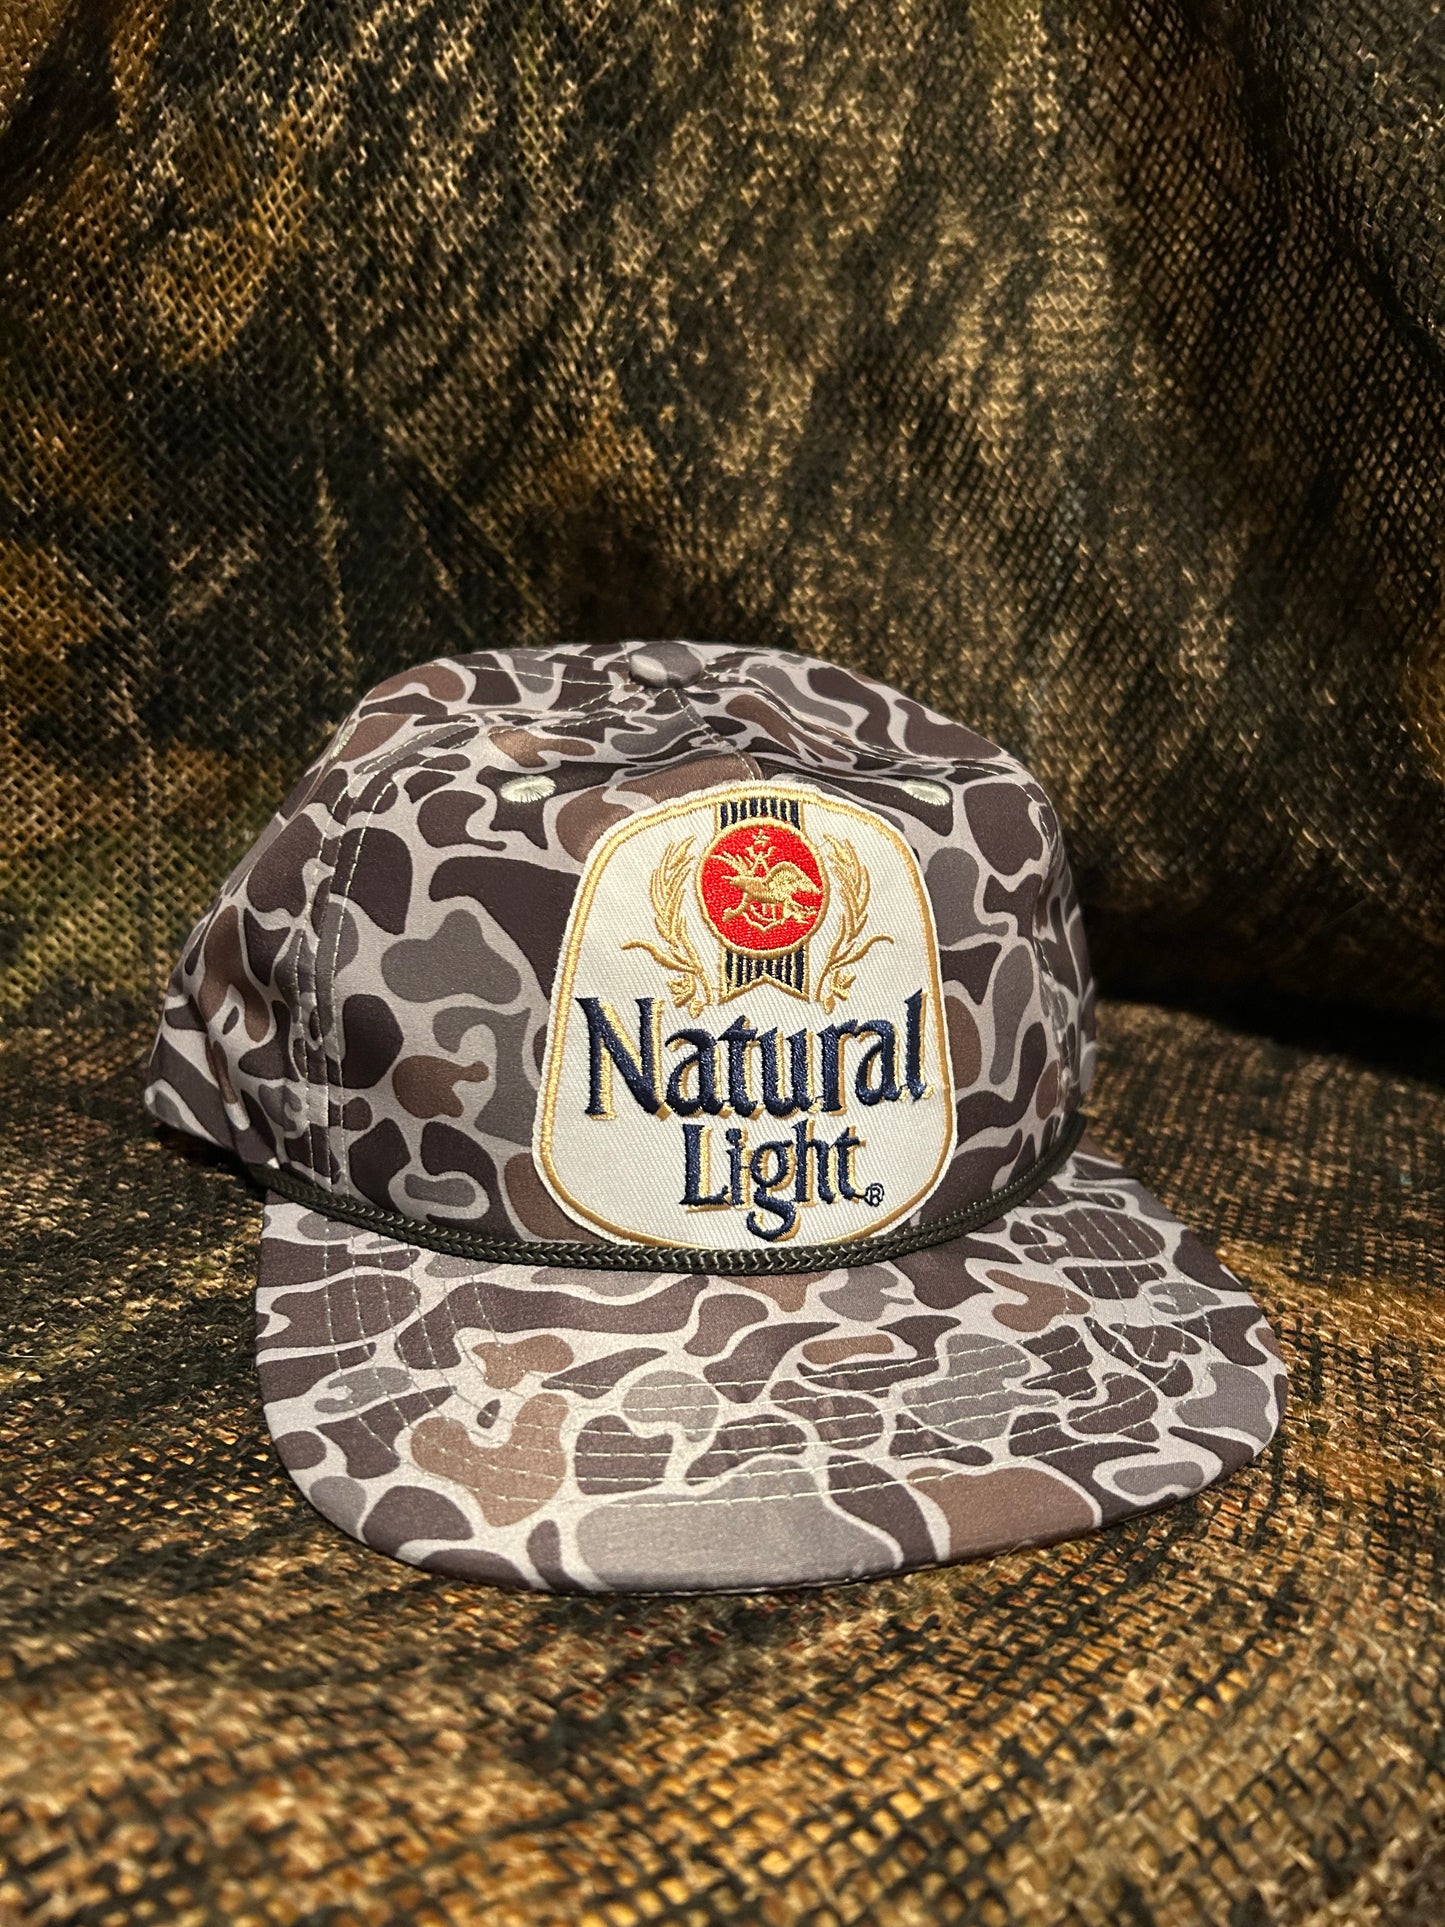 Natural light beer Smokeshow Camo SnapBack hat